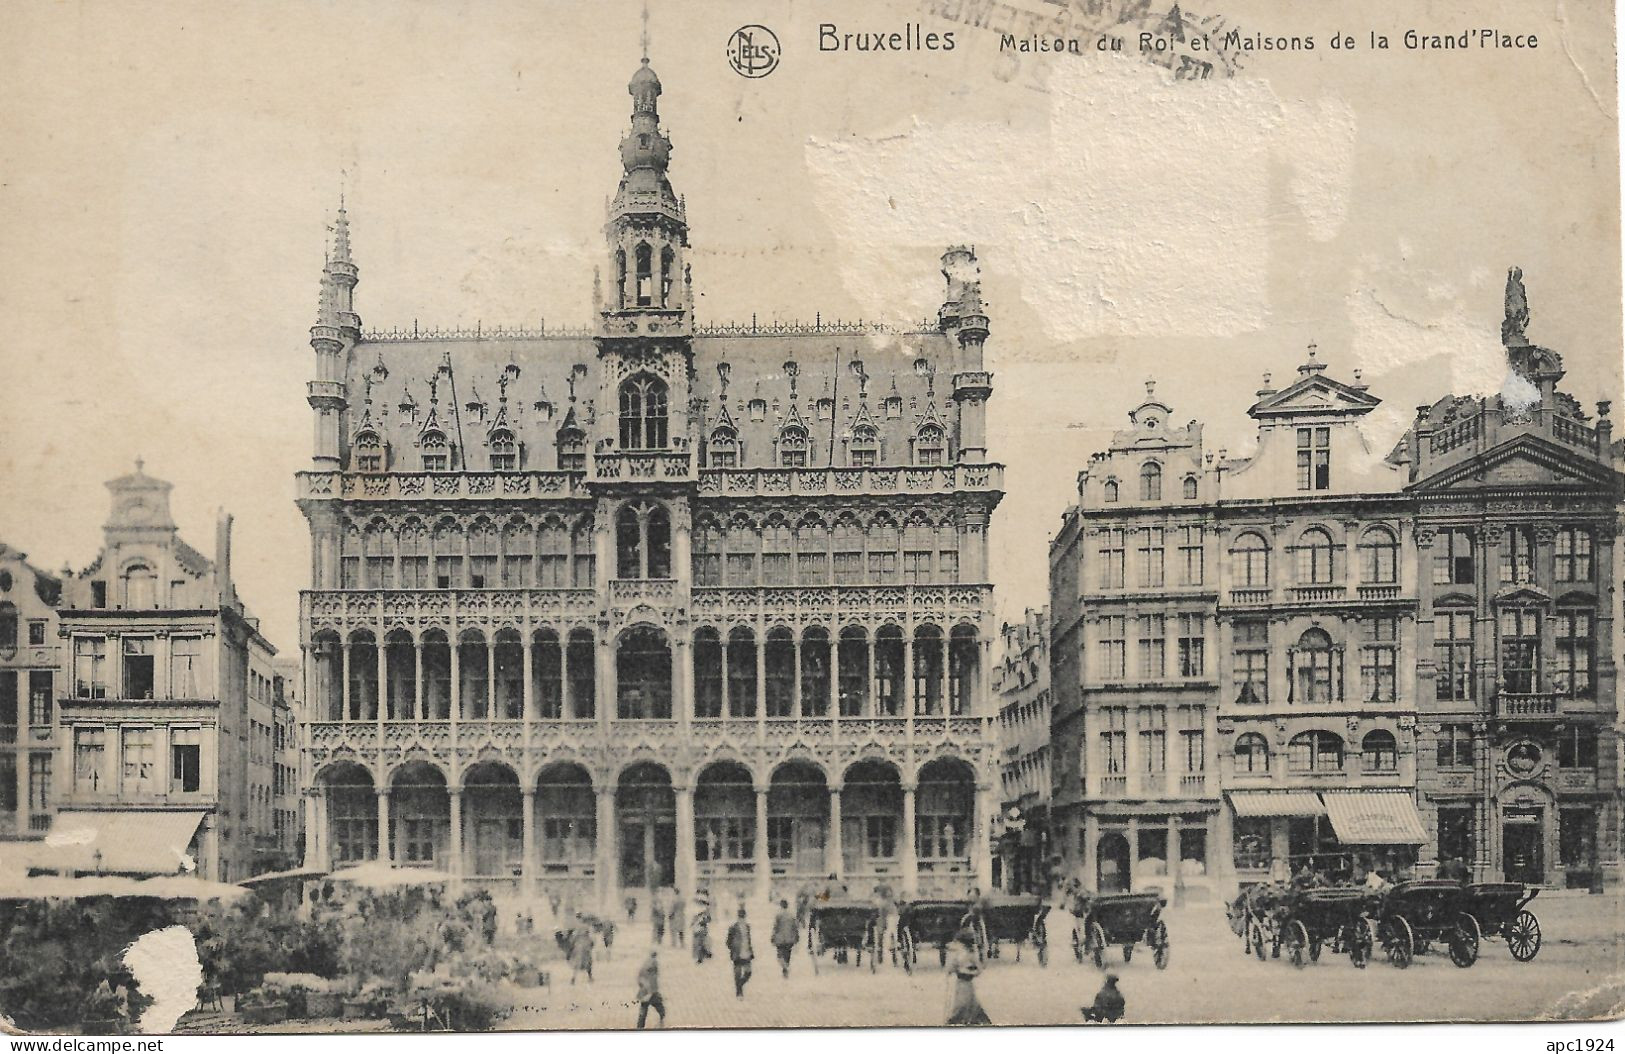 Belgica 1920 -  Postal Con Matasellos Especial De Los JJOO De 1920 - Circulada El 27 8 1920 A Paris - Verano 1920: Amberes (Anvers)